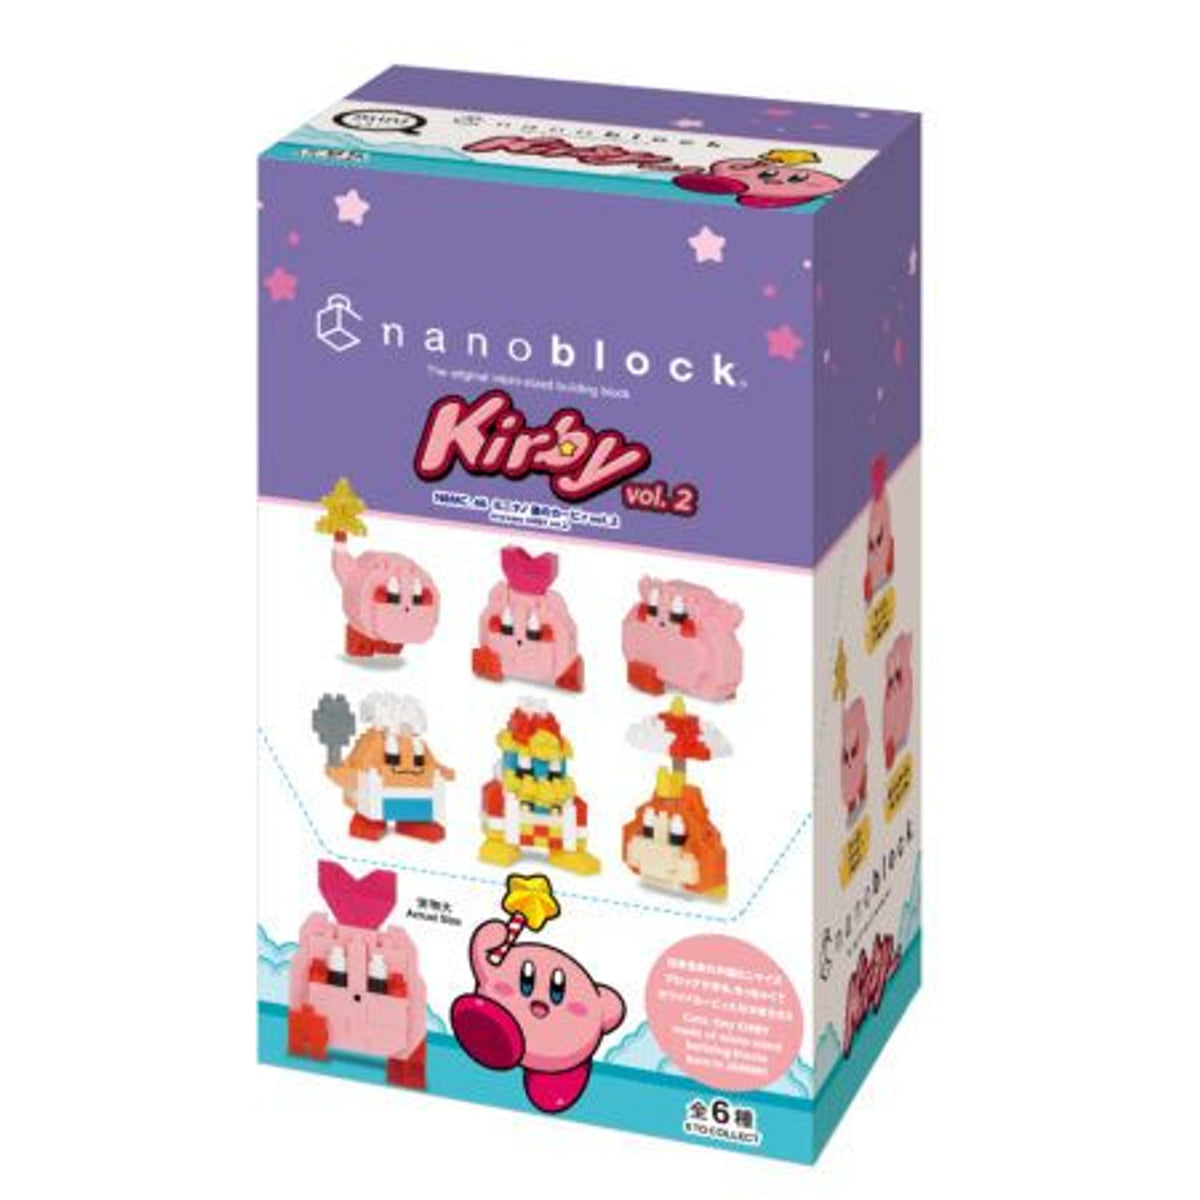 Nanoblocks - Mininano Kirby Vol.2 - Blind Box